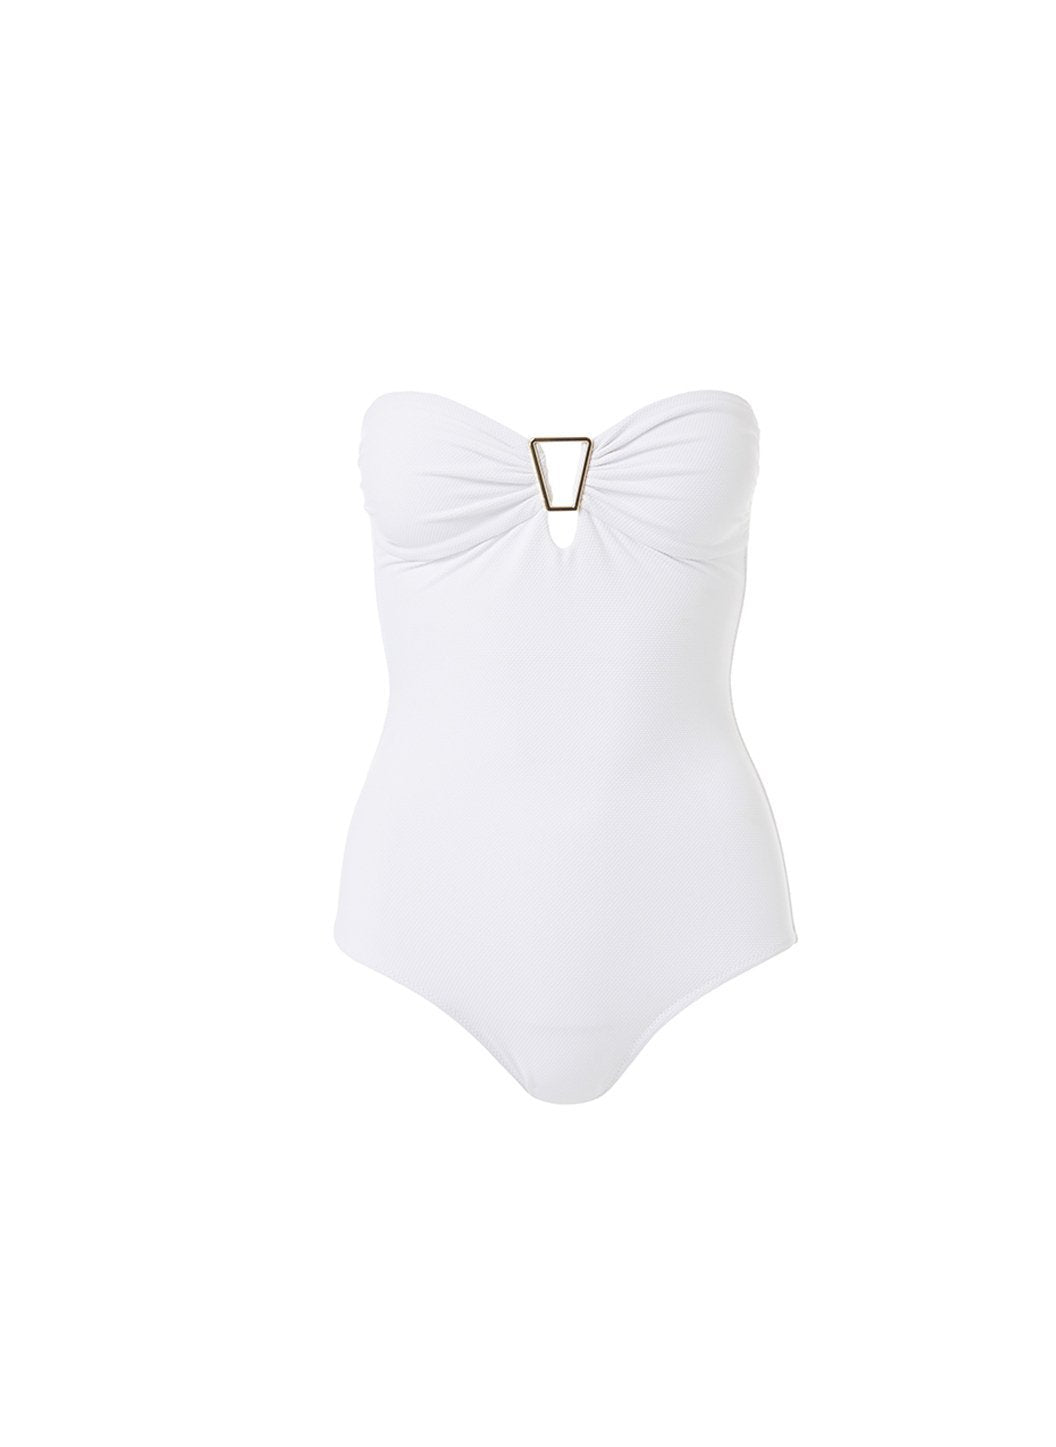 argentina white pique bandeau triangletrim onpiece swimsuit 2019